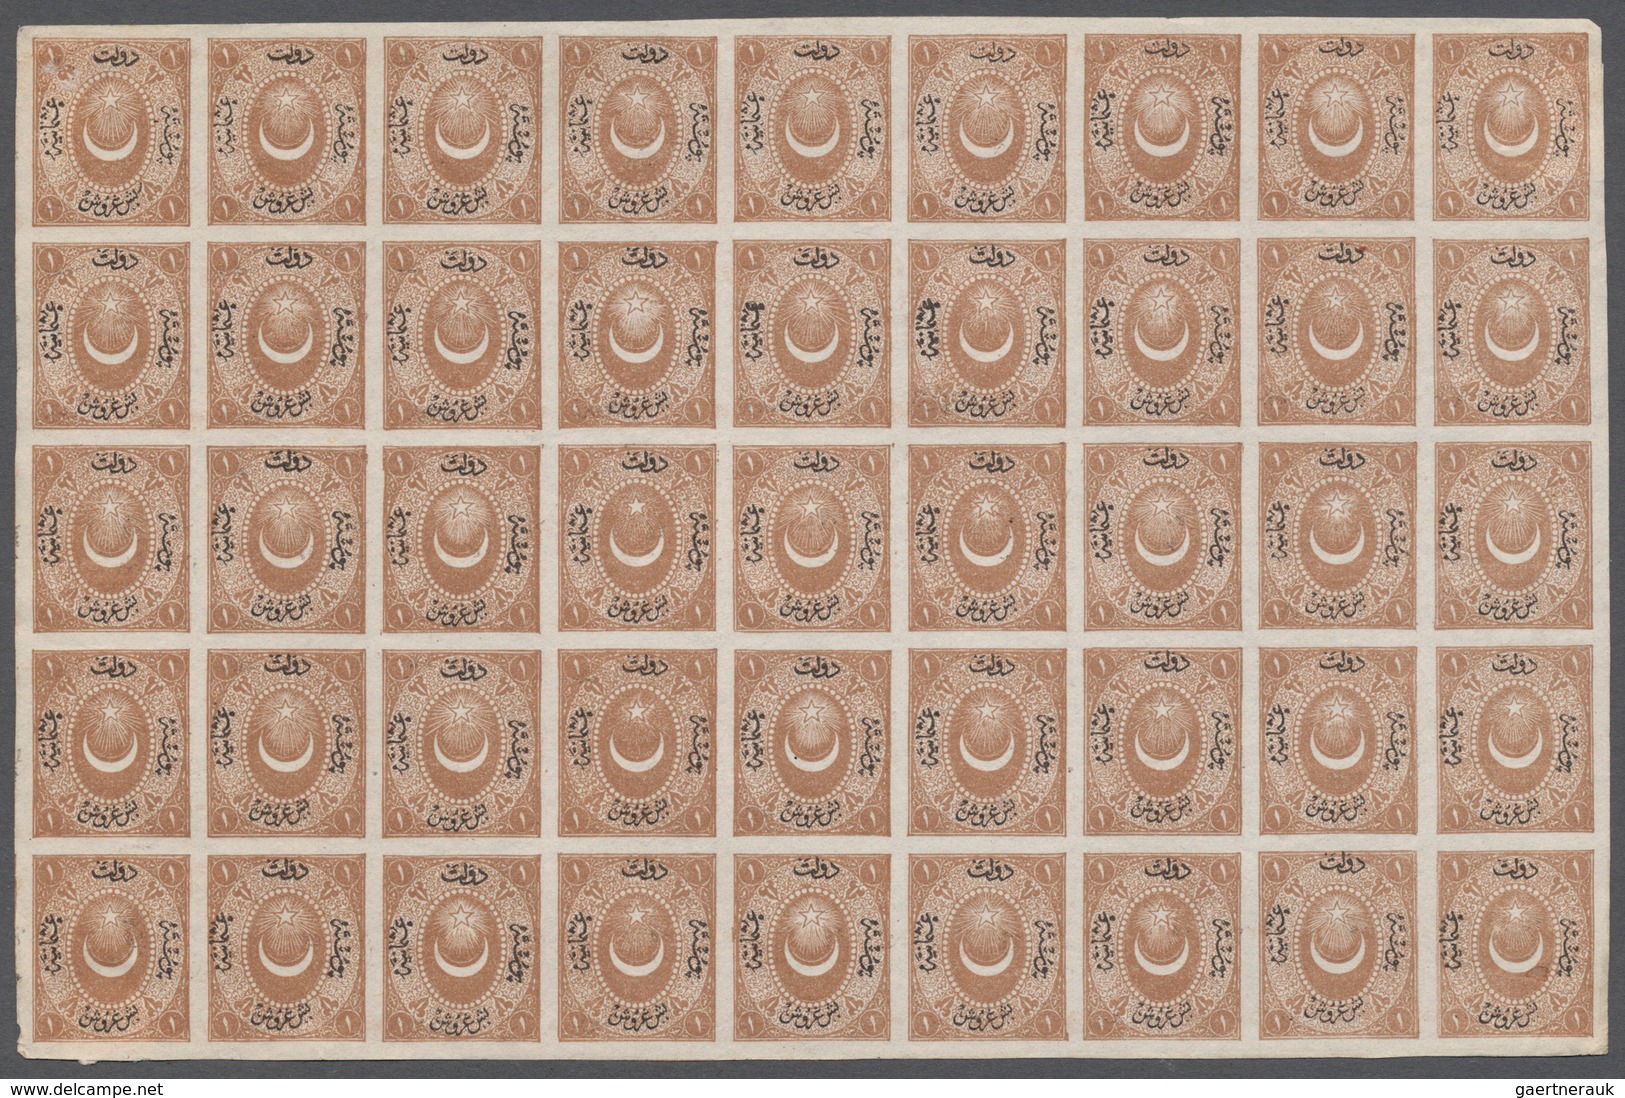 Türkei: 1867, 1 Pia. Brown Postage Due With "5" (Bes) Instead Of "1" (Bir) In Overprint, Imperf Part - Ungebraucht